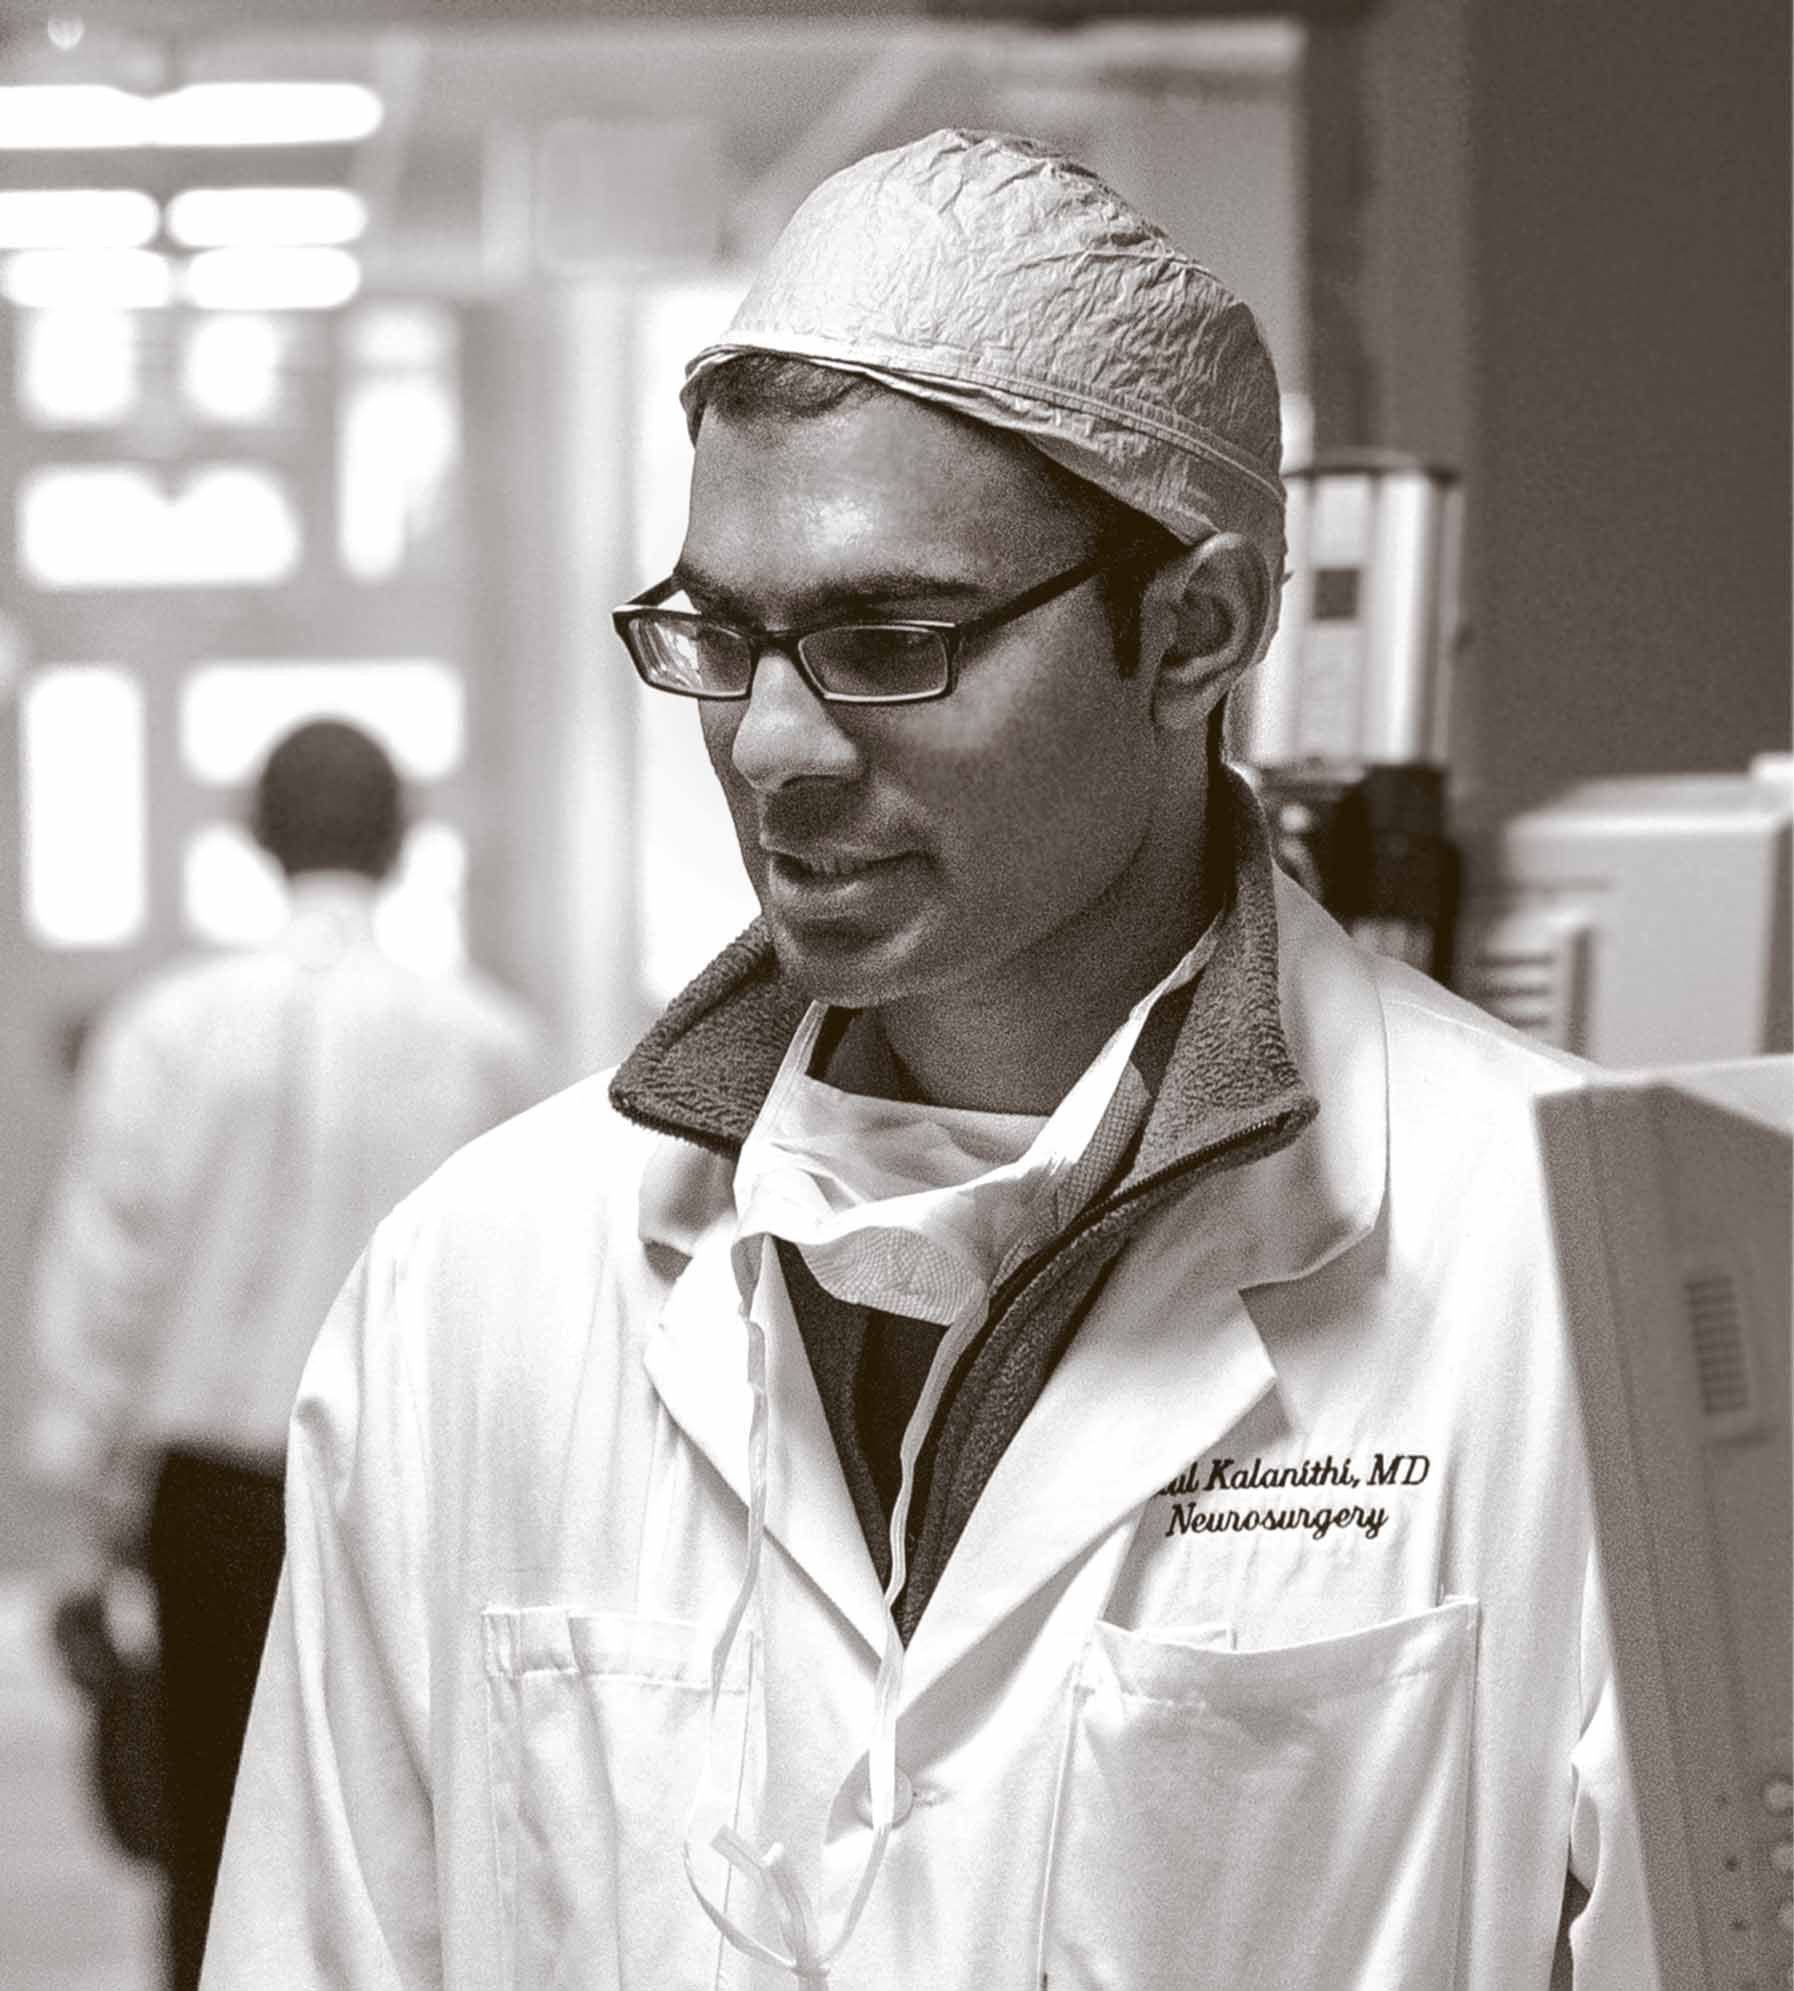 Dr. Paul Kalanithi, a neurosurgeon and neuroscientist, wearing his white coat.